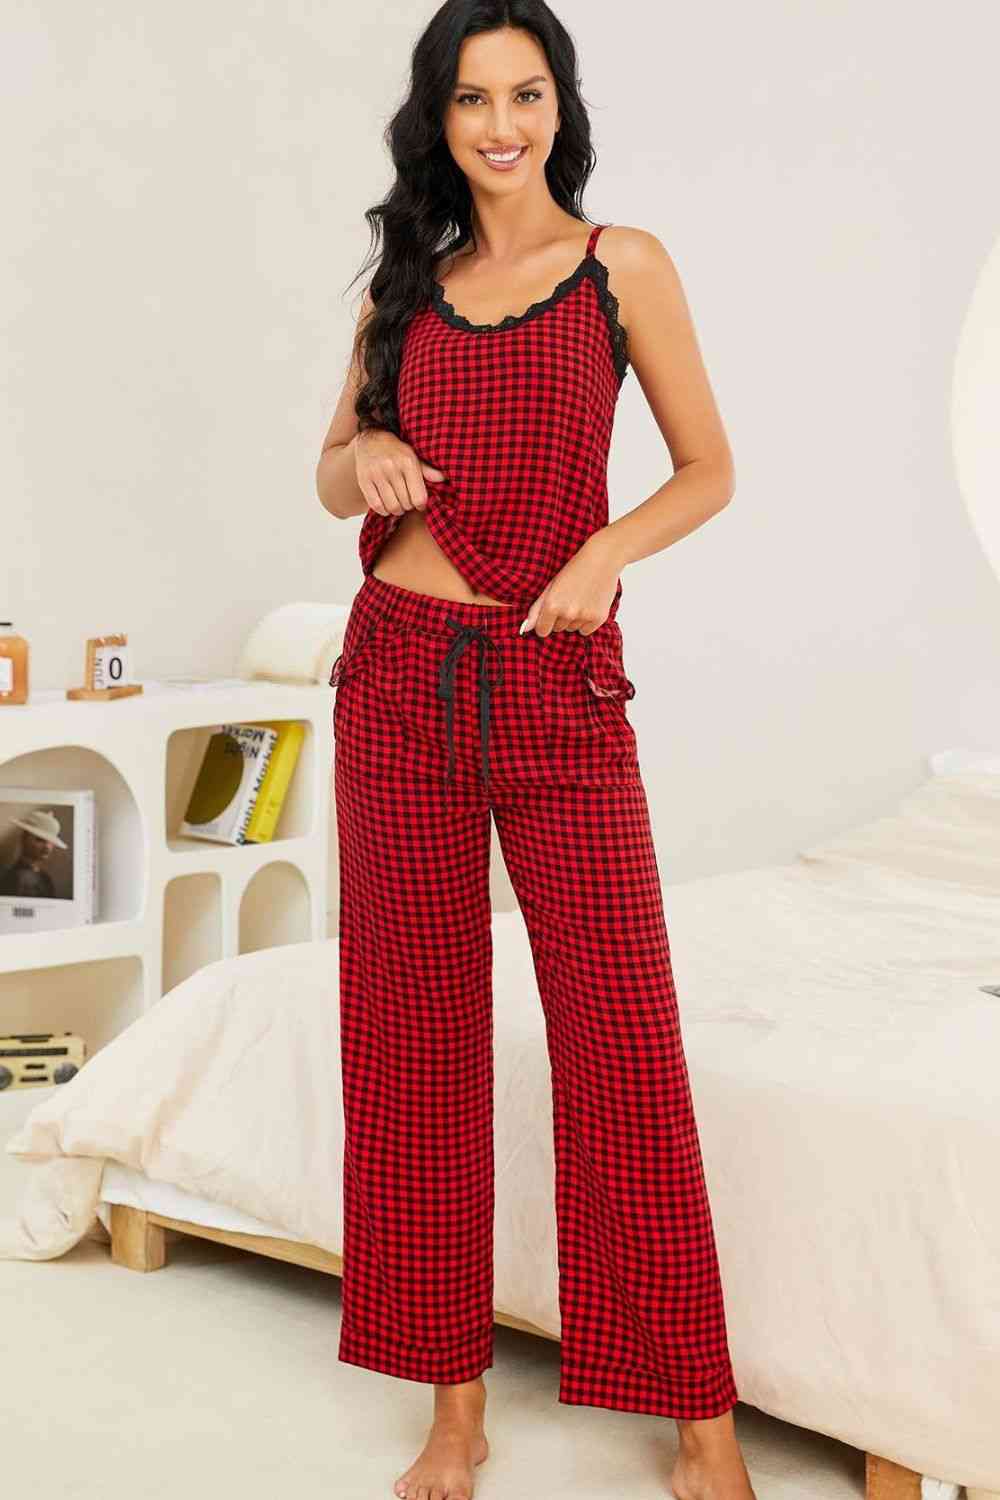 Plaid Lace Trim Cami and Drawstring Pants Pajama Set Loungewear Krazy Heart Designs Boutique Plaid S 